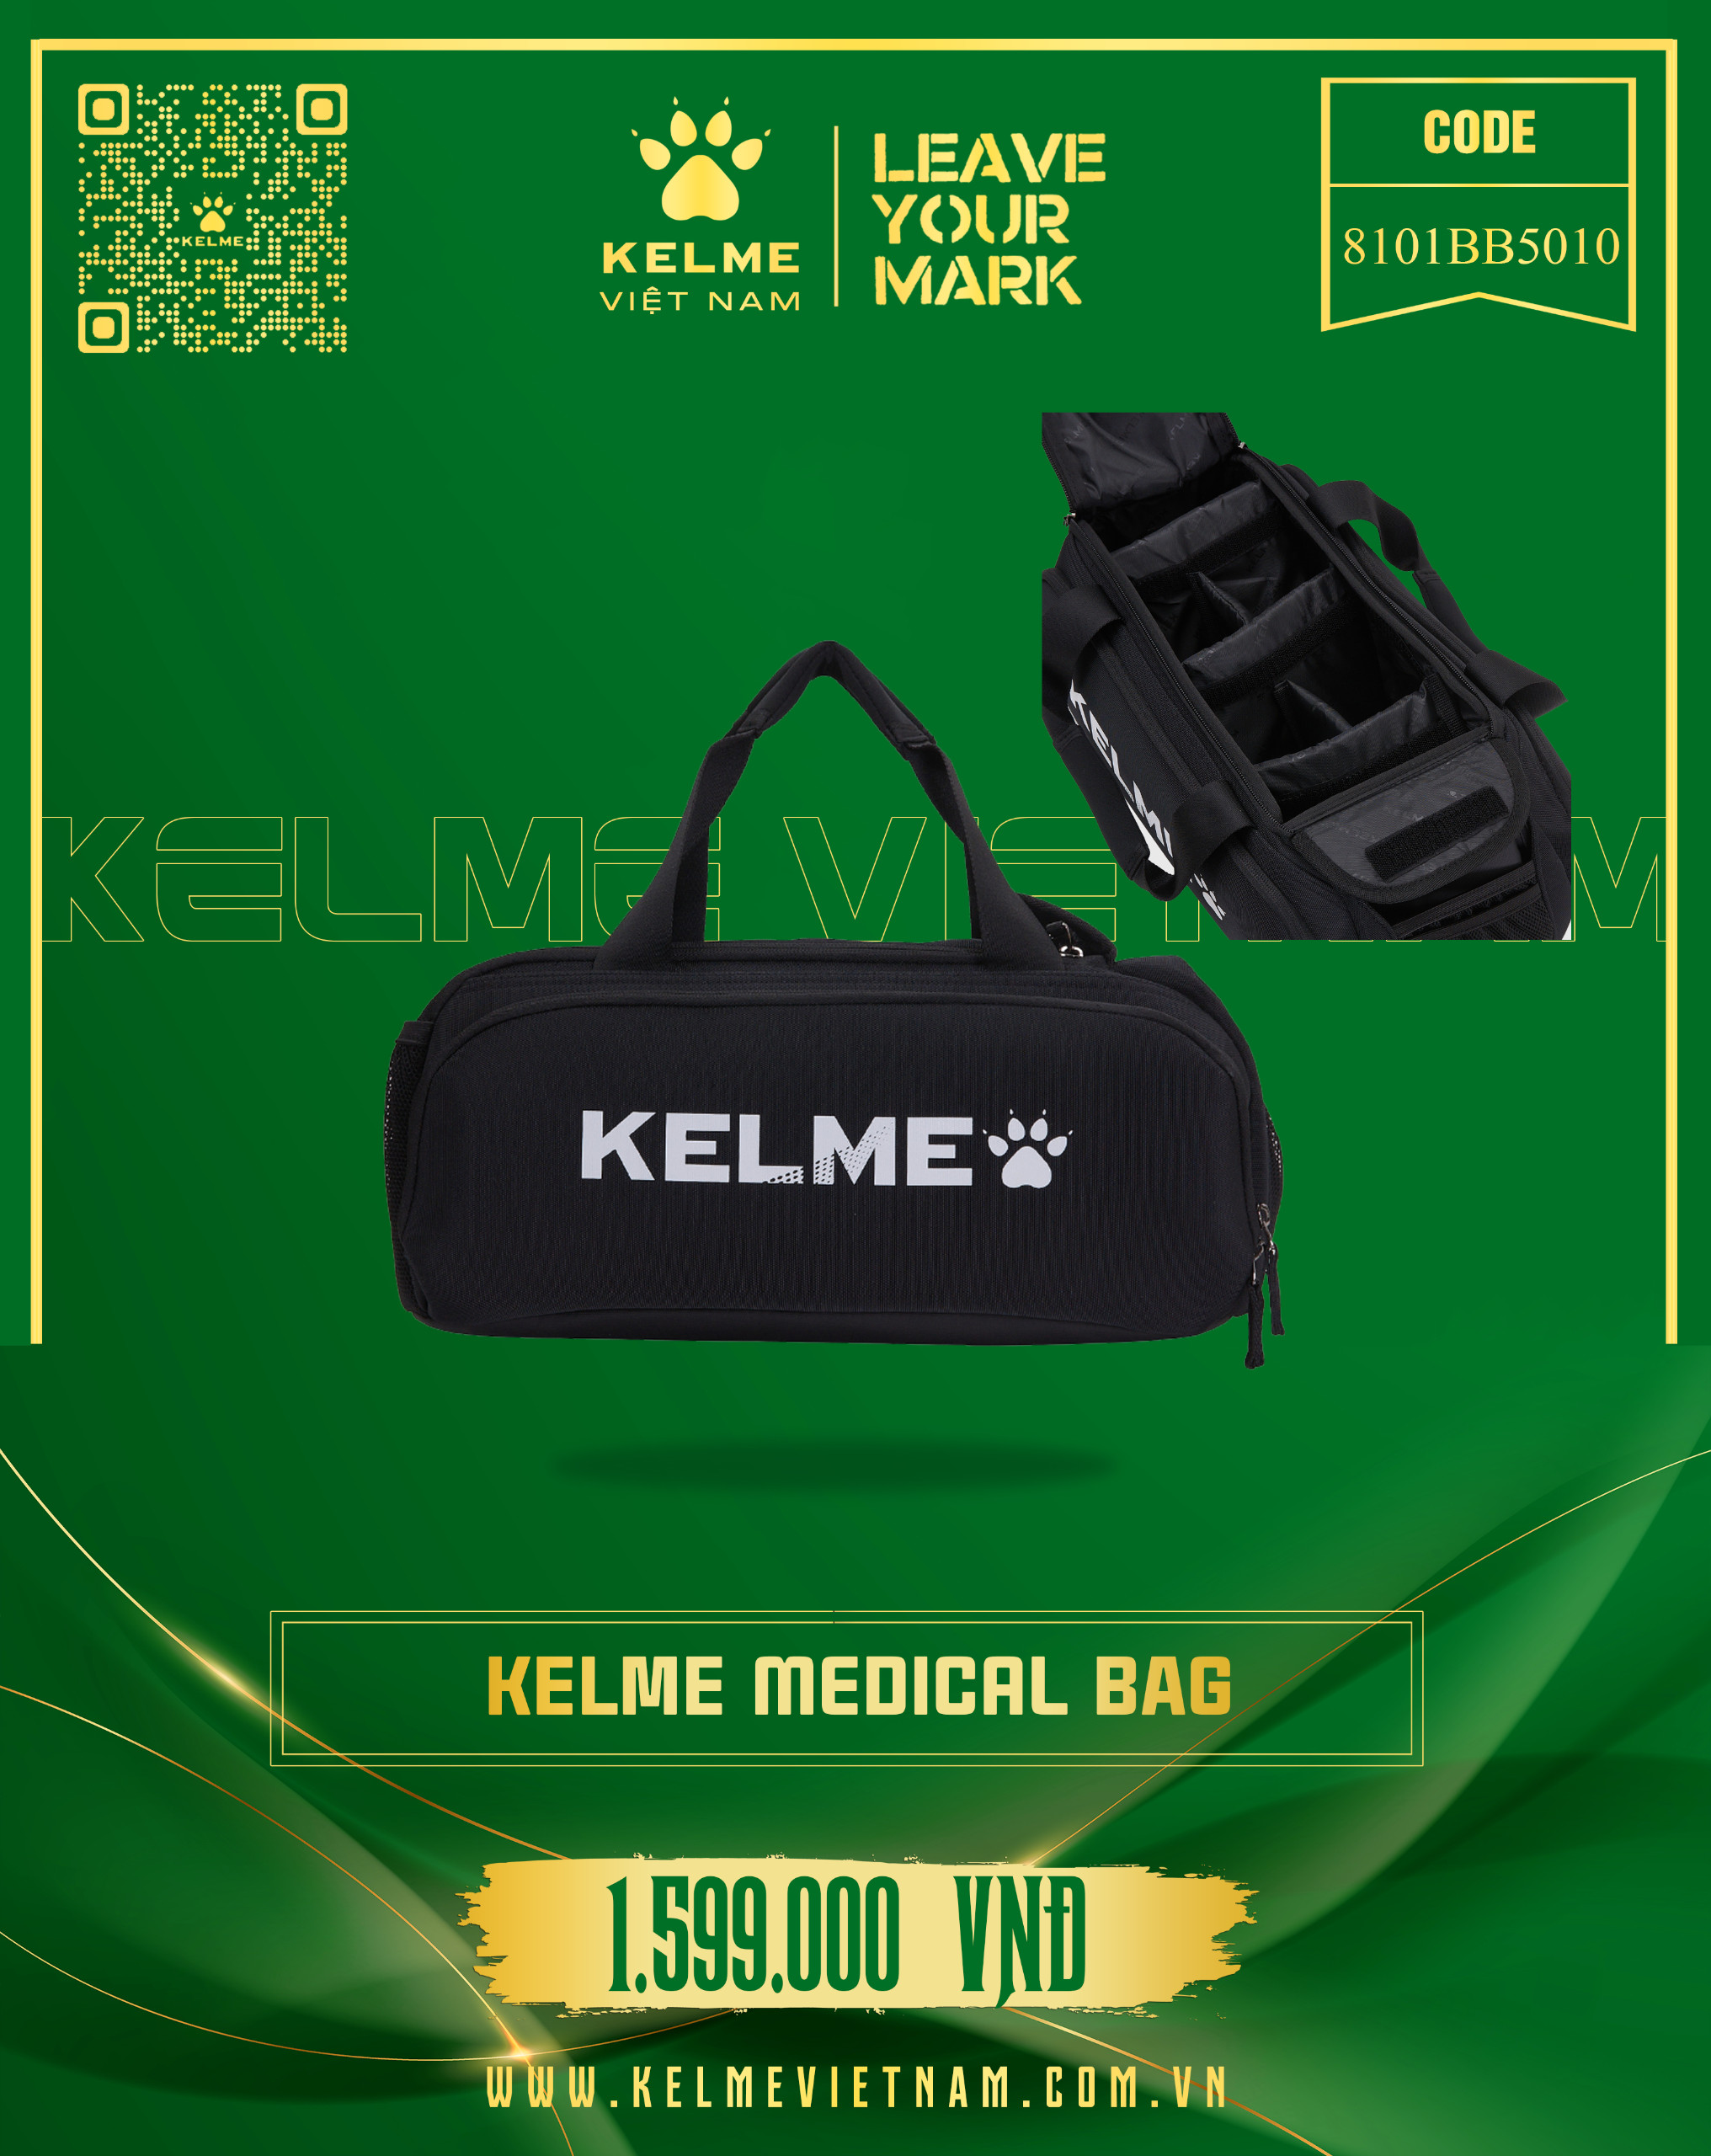 KELME MEDICAL BAG 8101BB5010